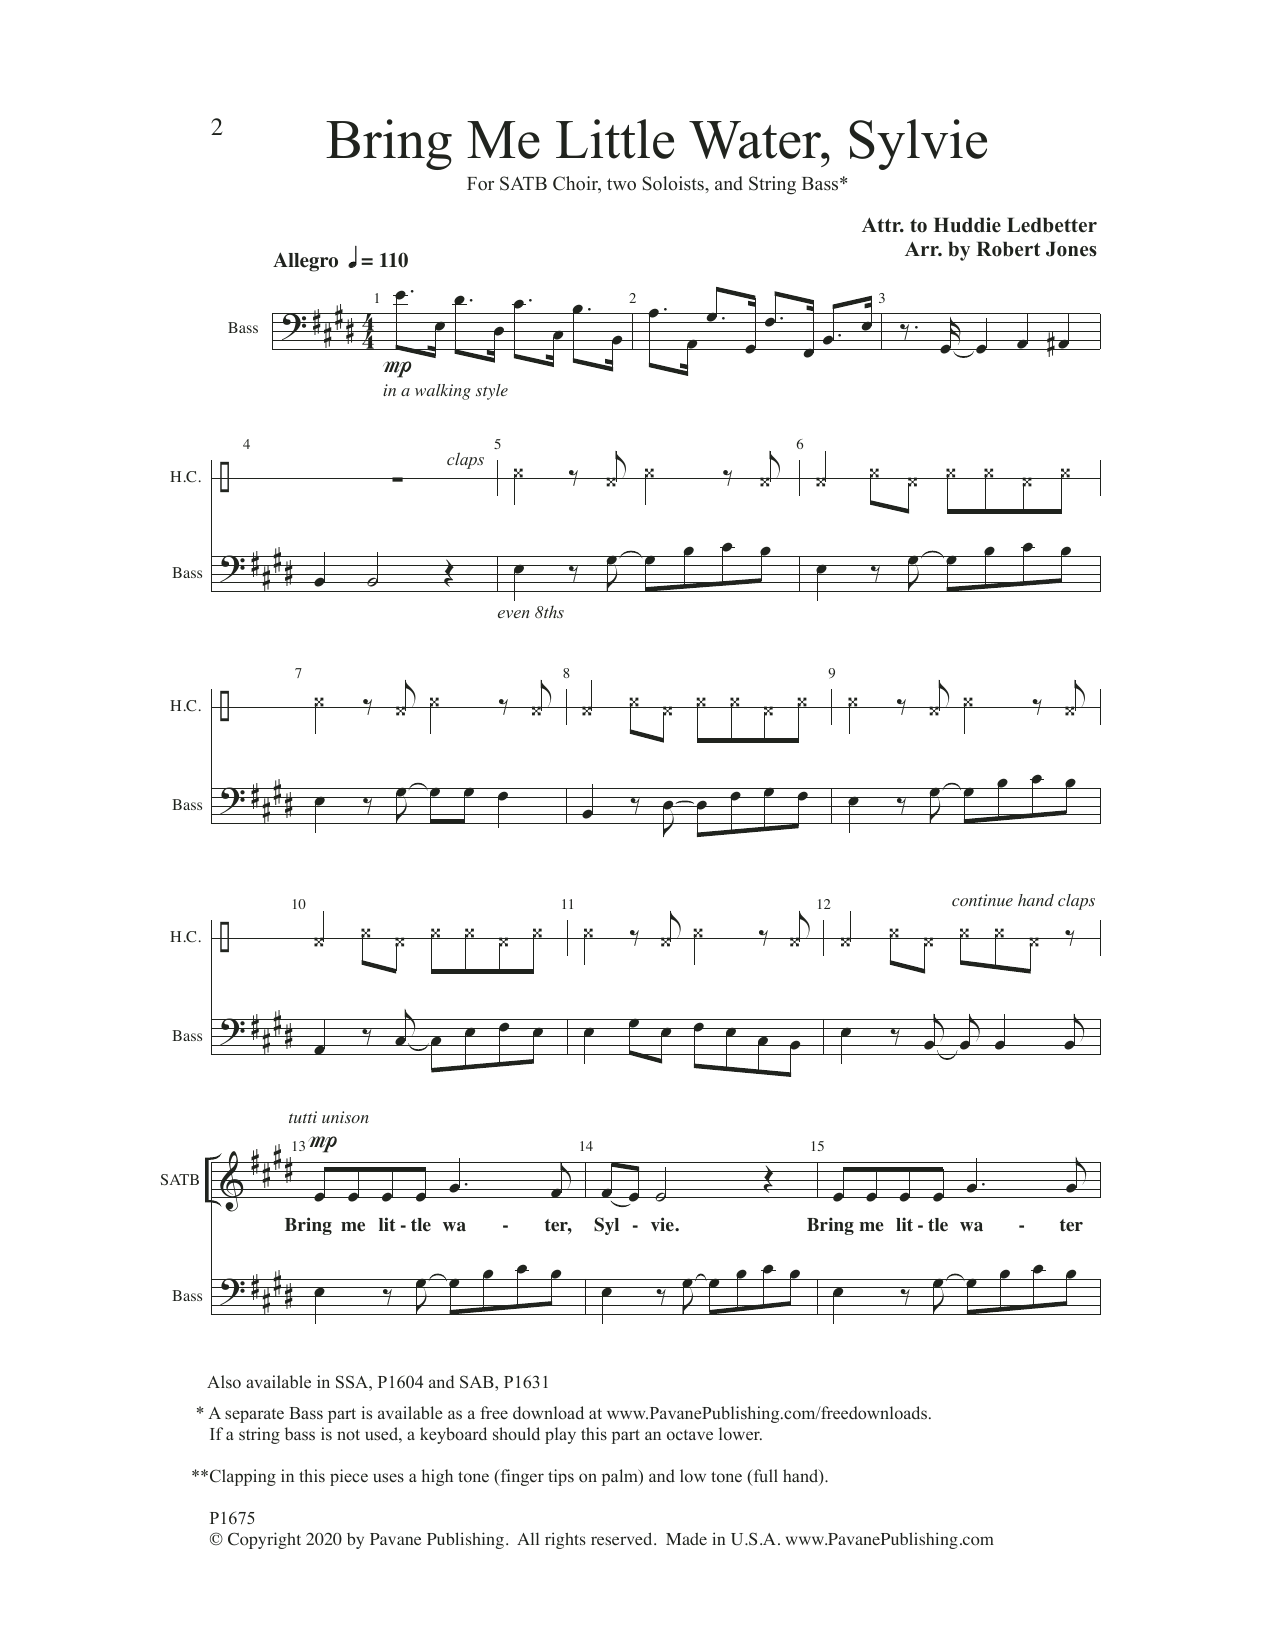 Robert Jones Bring Me little Water, Sylvie Sheet Music Notes & Chords for SATB Choir - Download or Print PDF